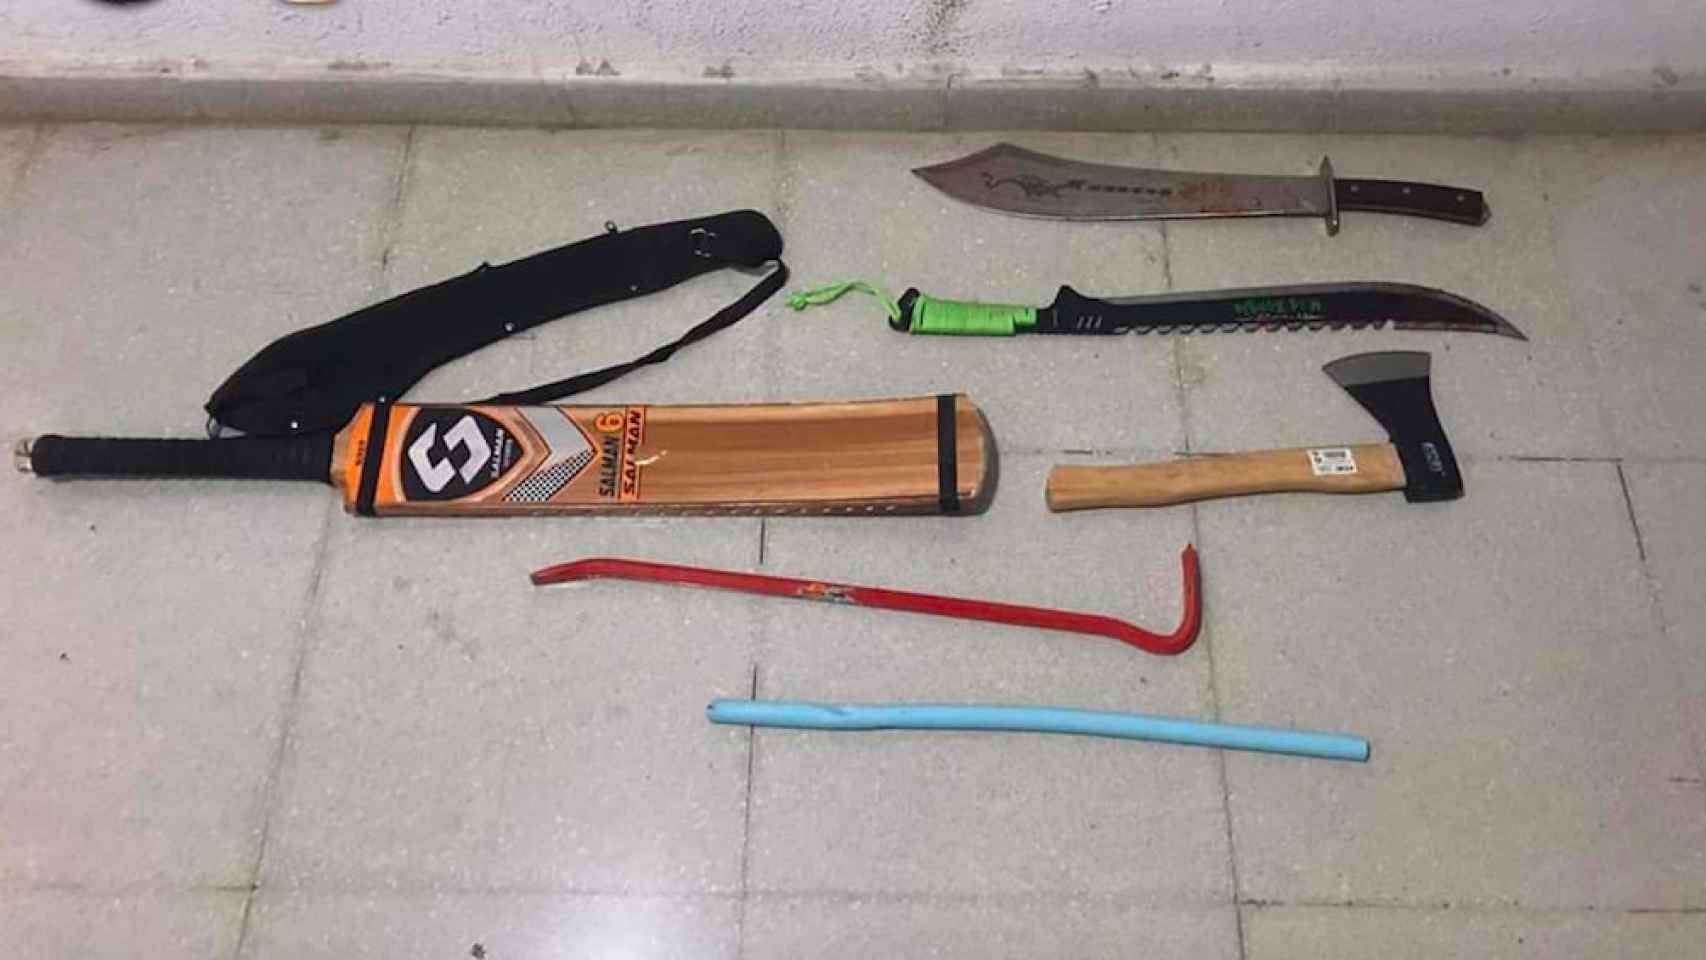 Varias armas incautadas durante la reyerta mortal en Badalona